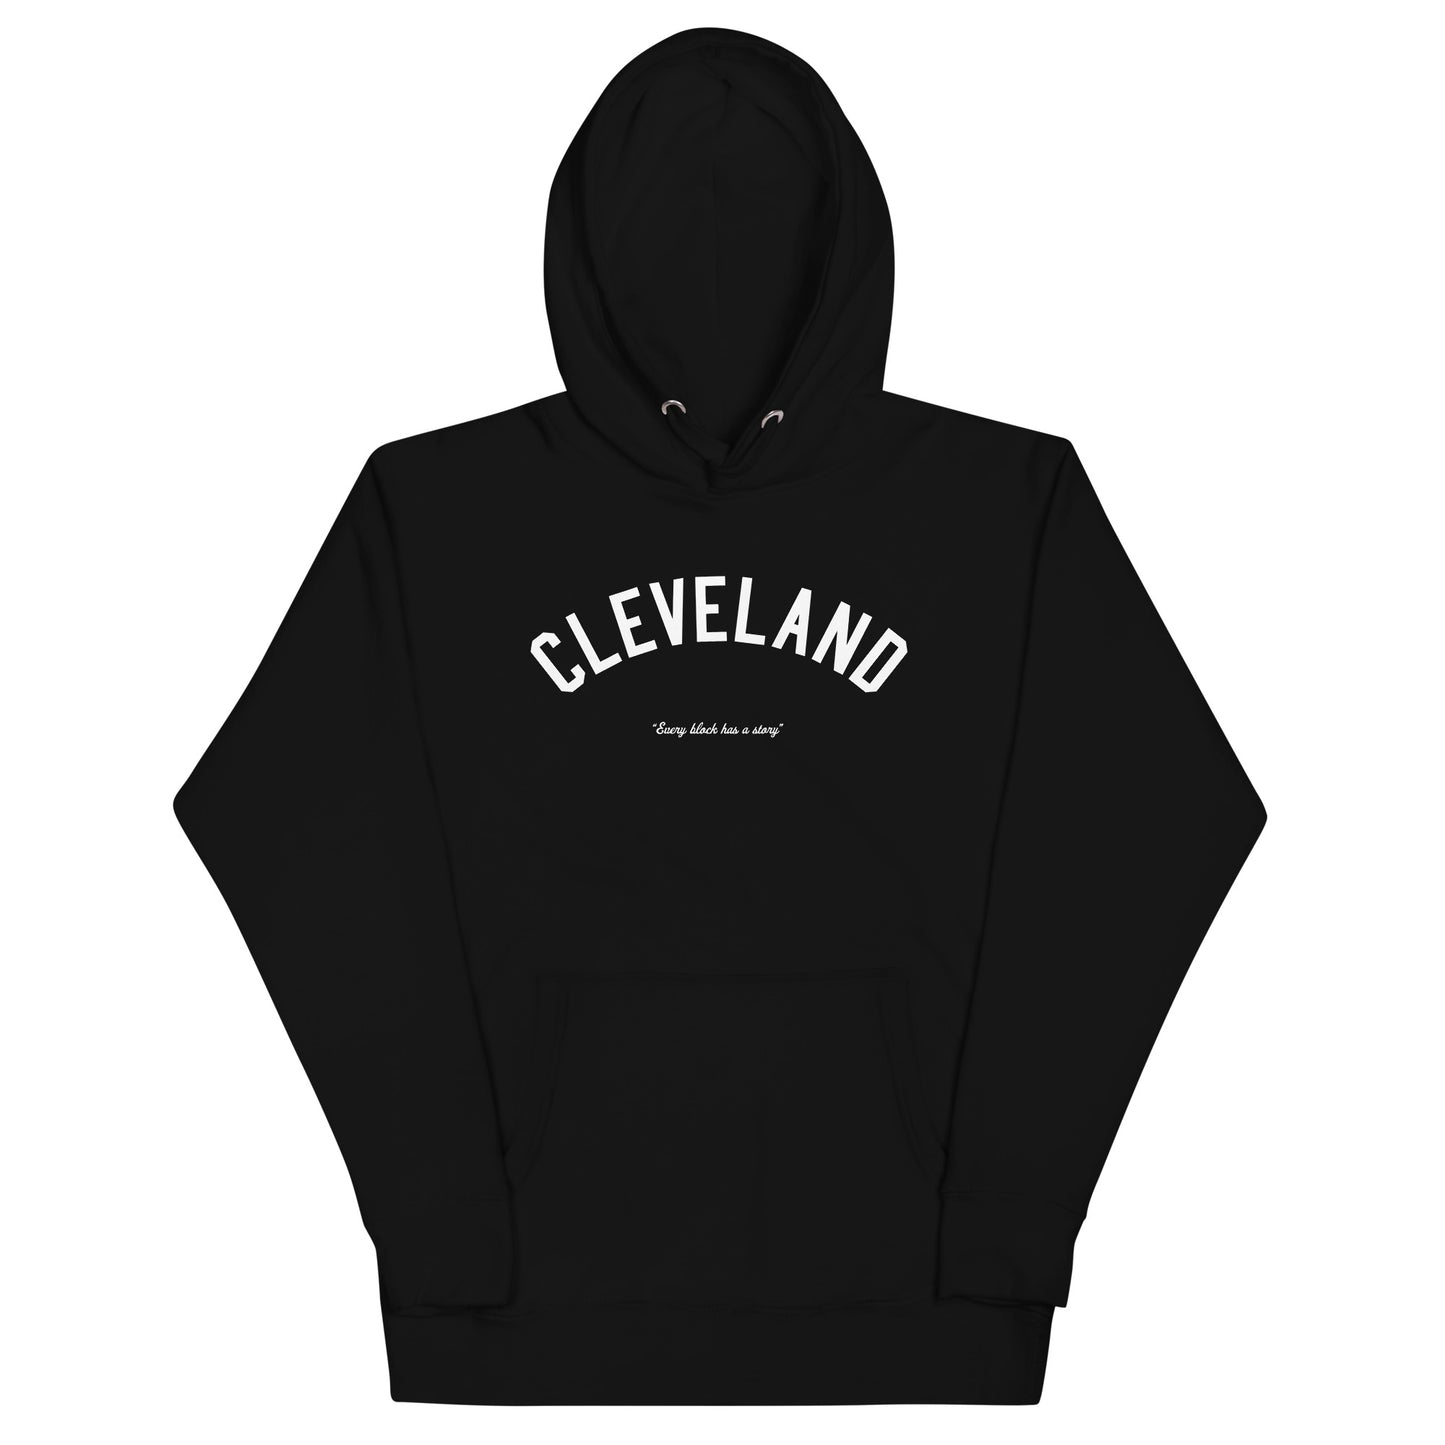 Cleveland Story Sweatshirt